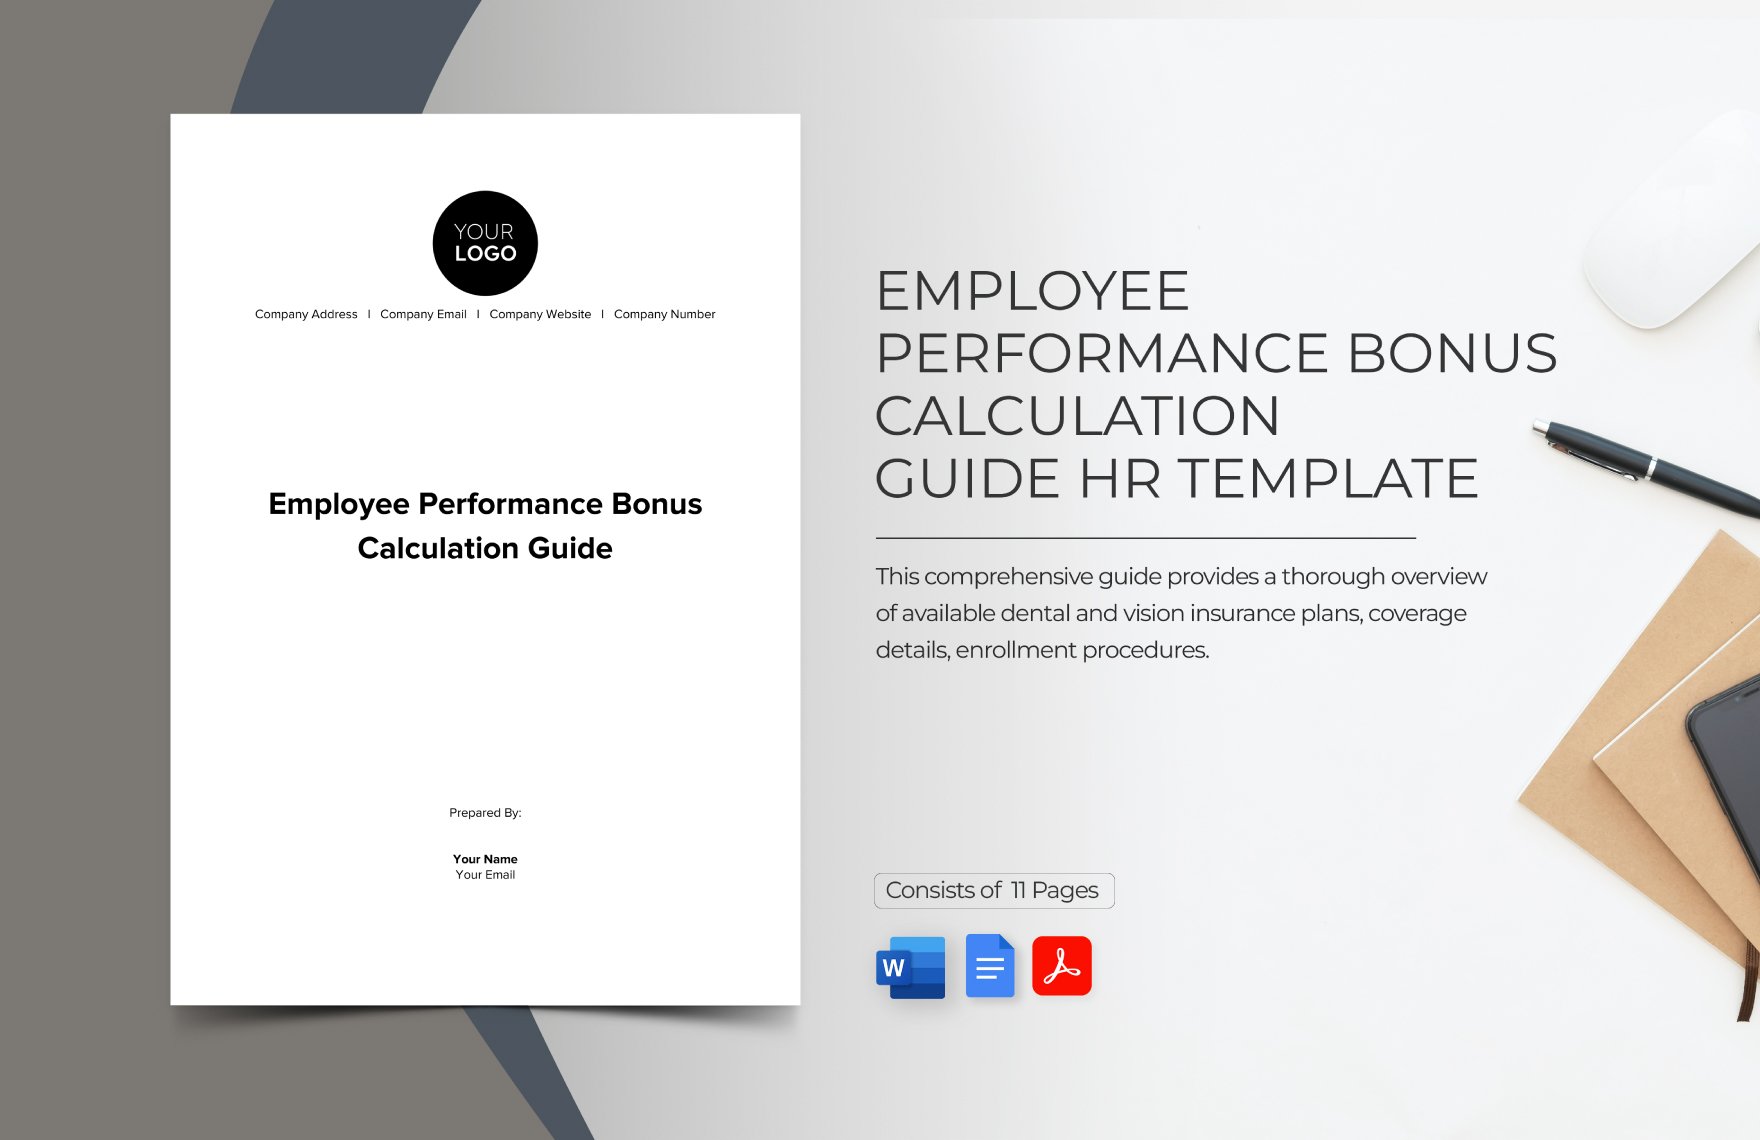 Employee Performance Bonus Calculation Guide HR Template